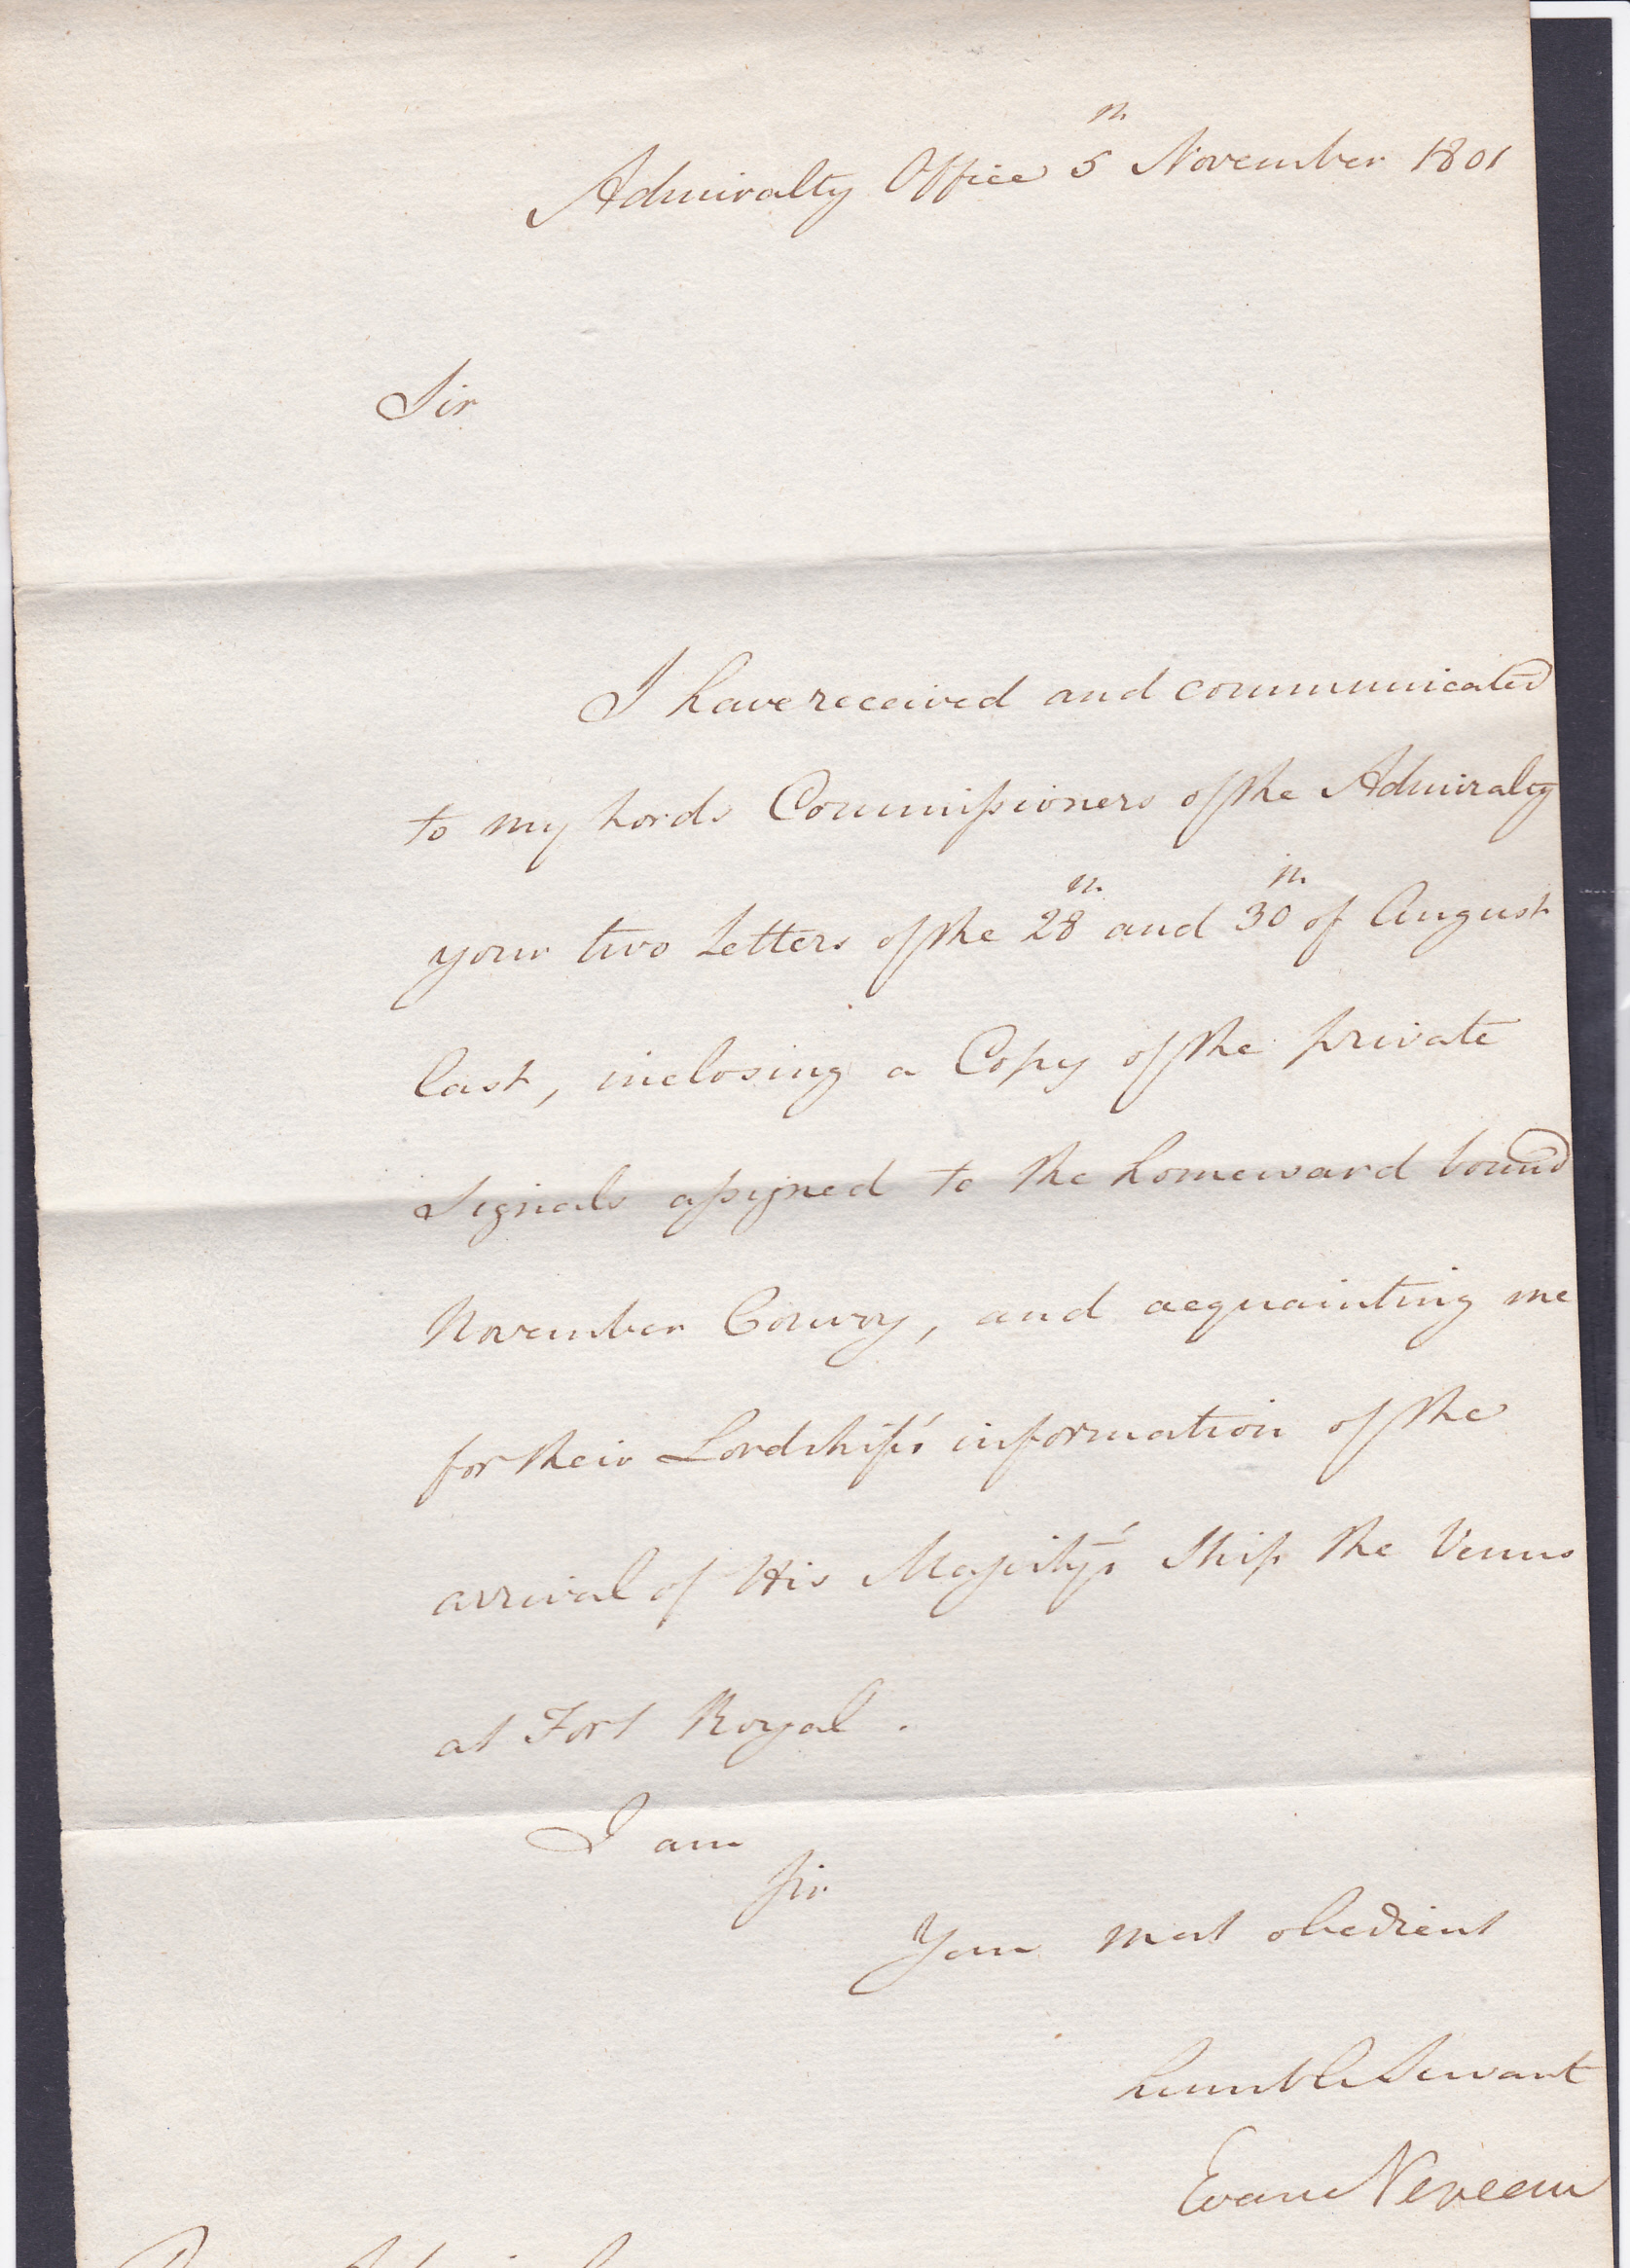 LEEWARD ISLANDS, 1801 letter from Admira